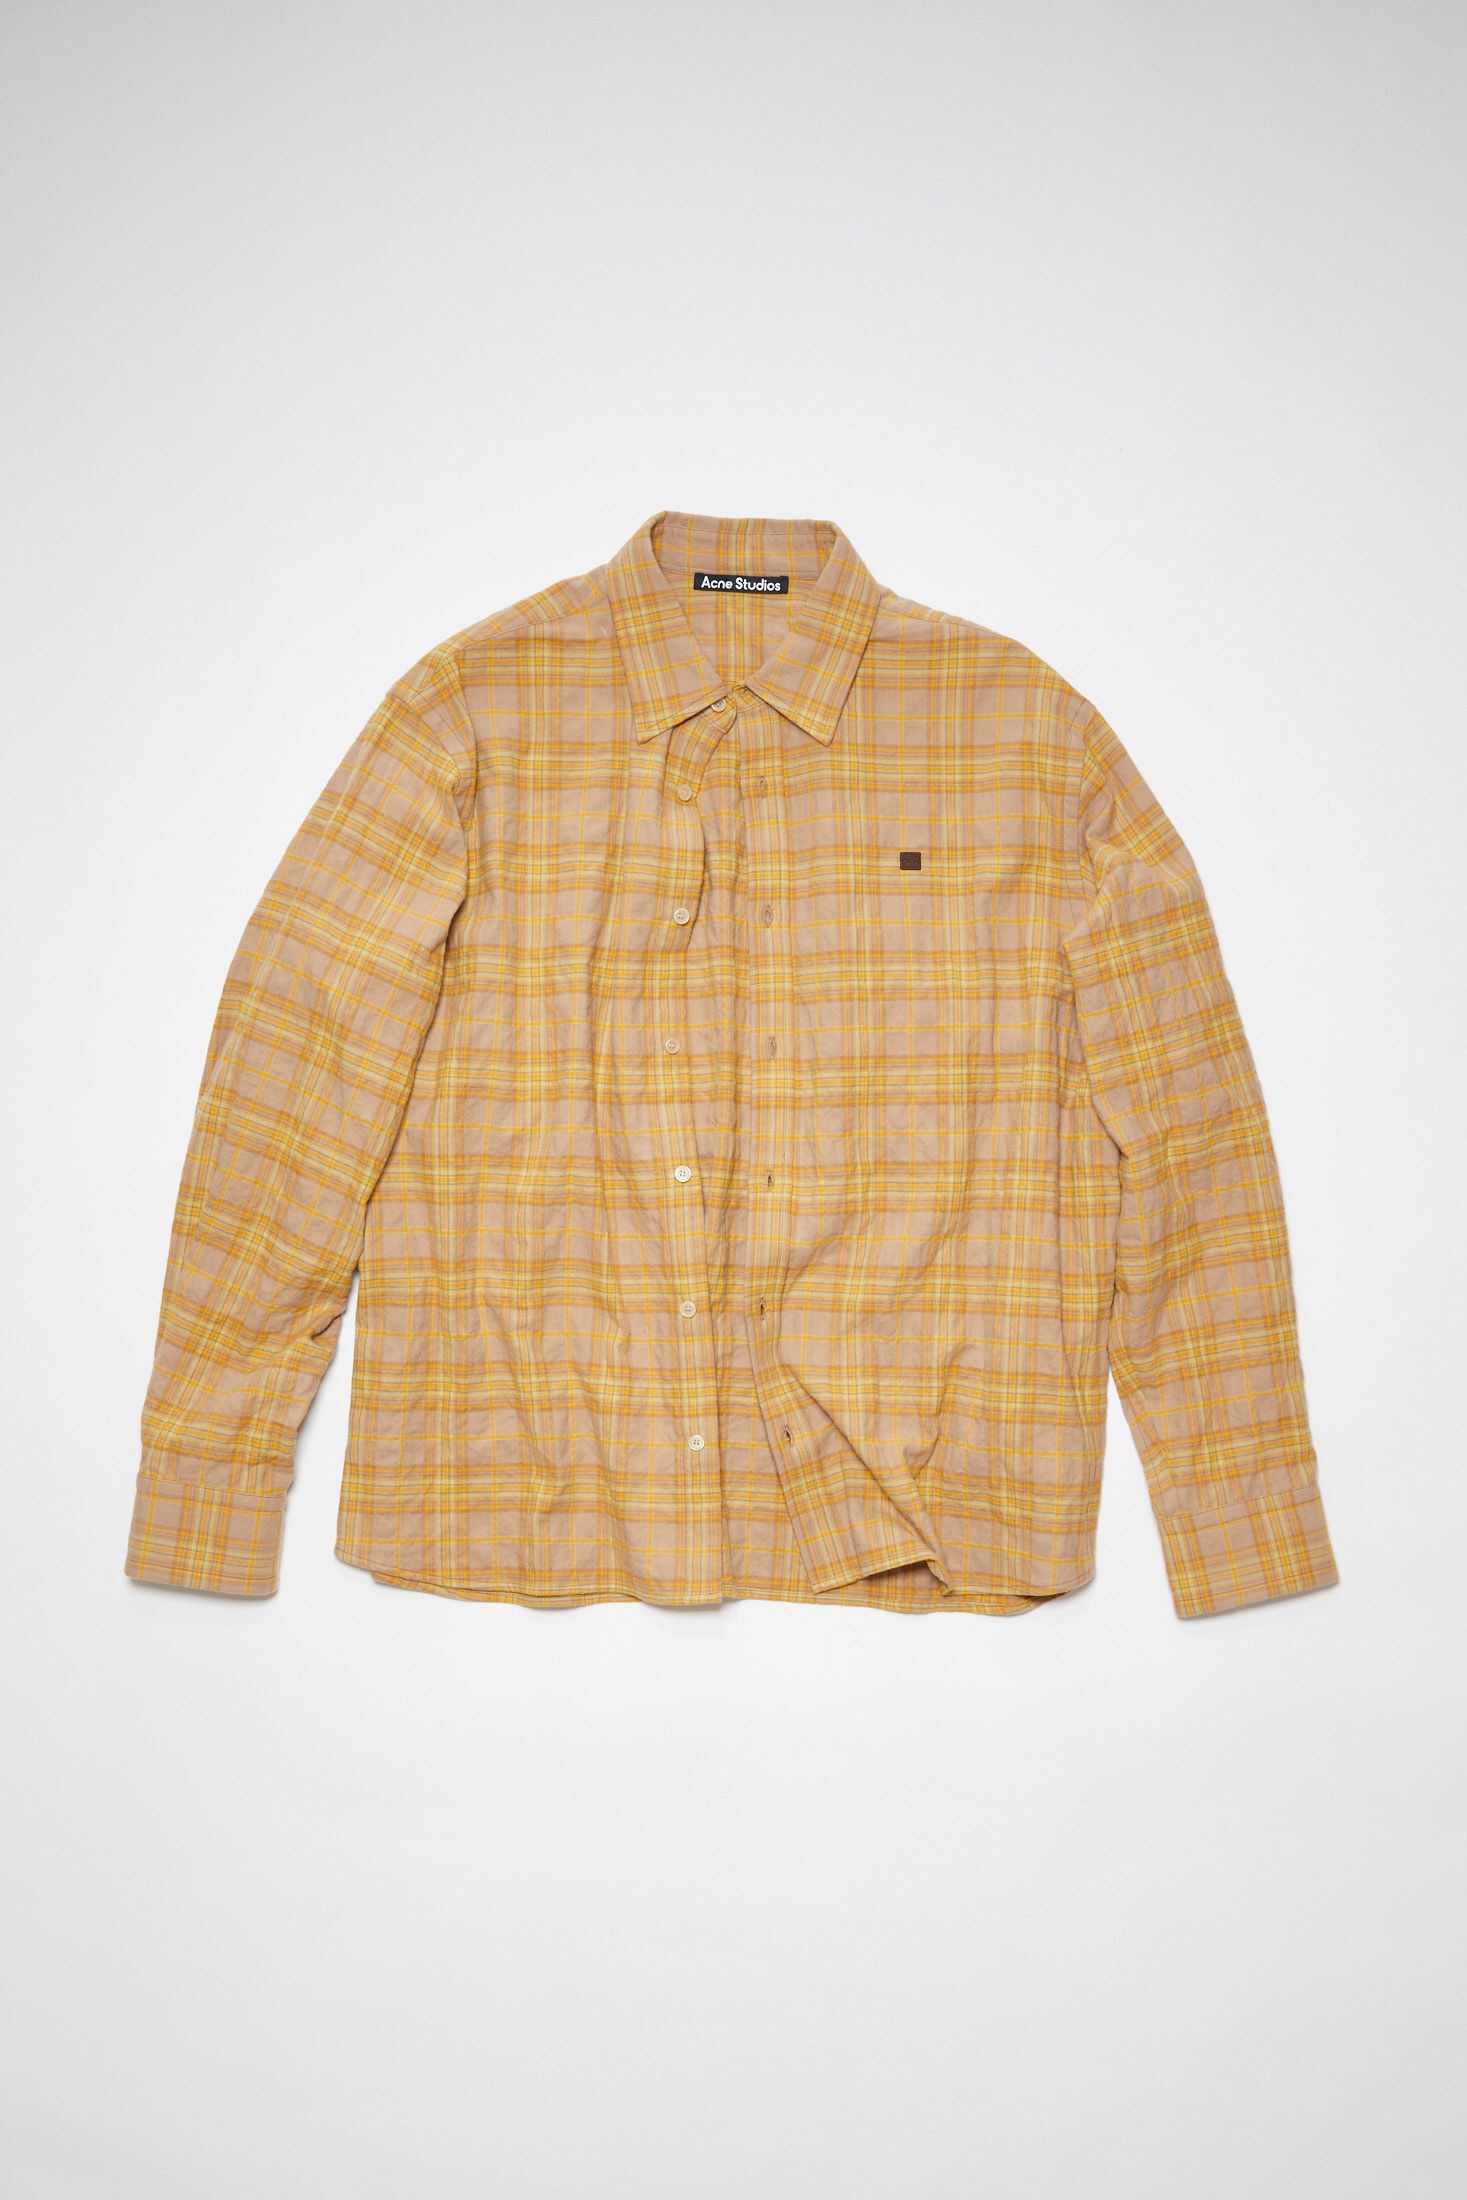 Acne Studios Check flannel button-up shirt - Brown/orange